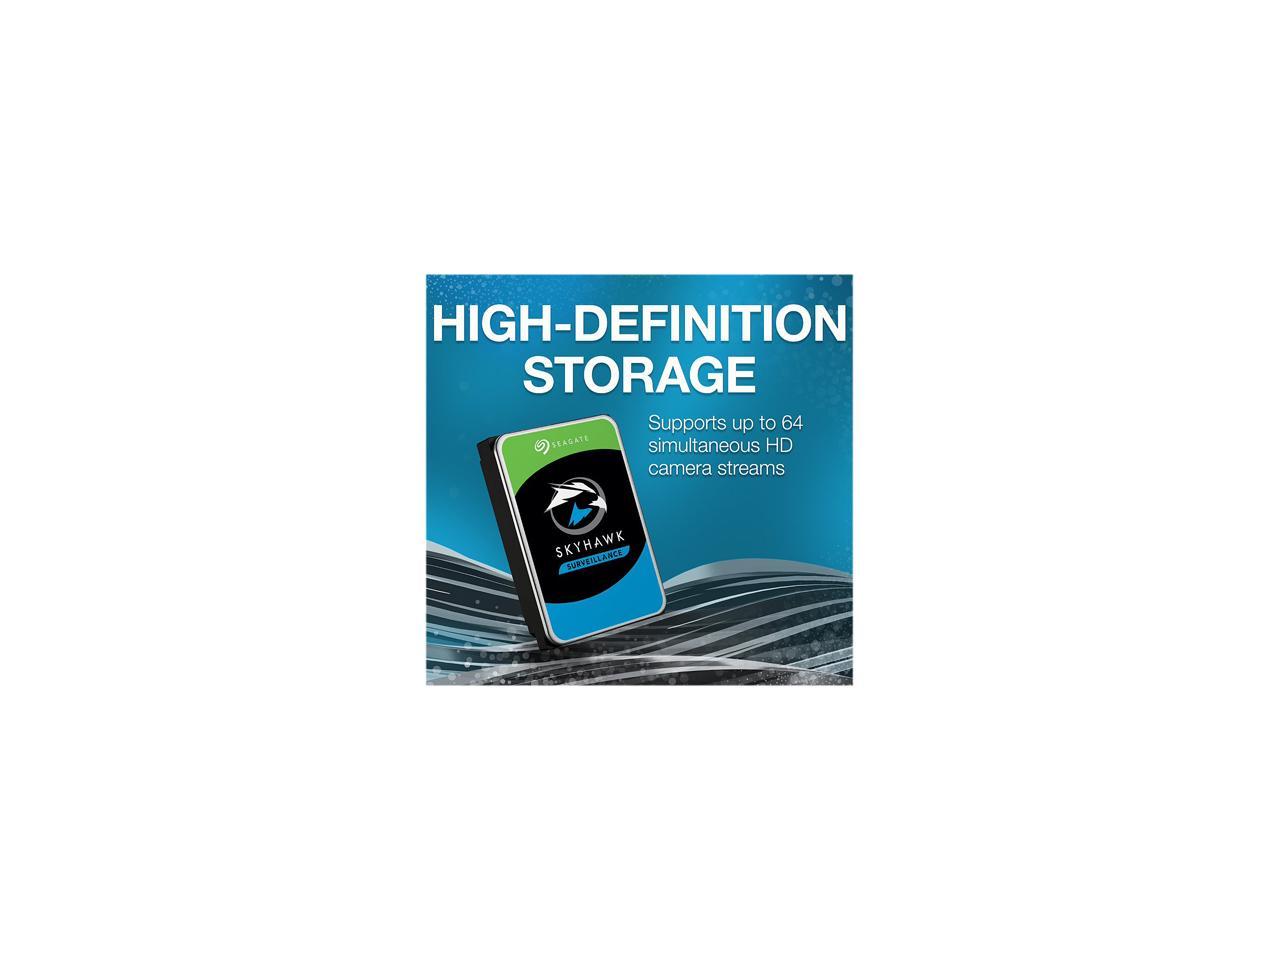 Seagate SkyHawk 4TB Surveillance Hard Drive 256MB Cache SATA 6.0Gb/s NVR DVR 3.5" Internal HDD ST4000VX013